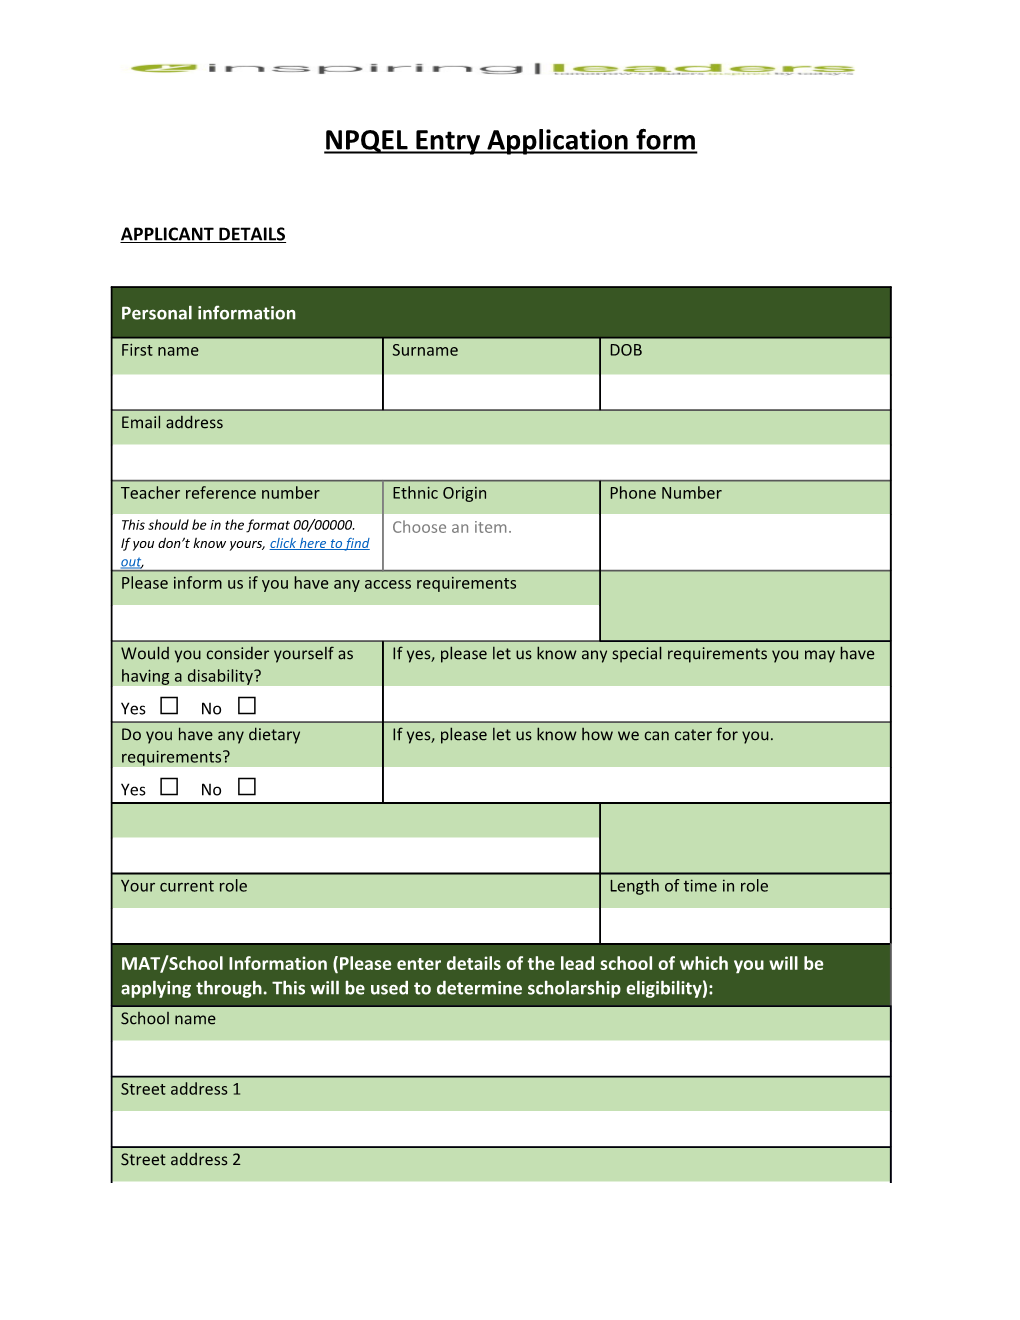 NPQEL Entry Application Form